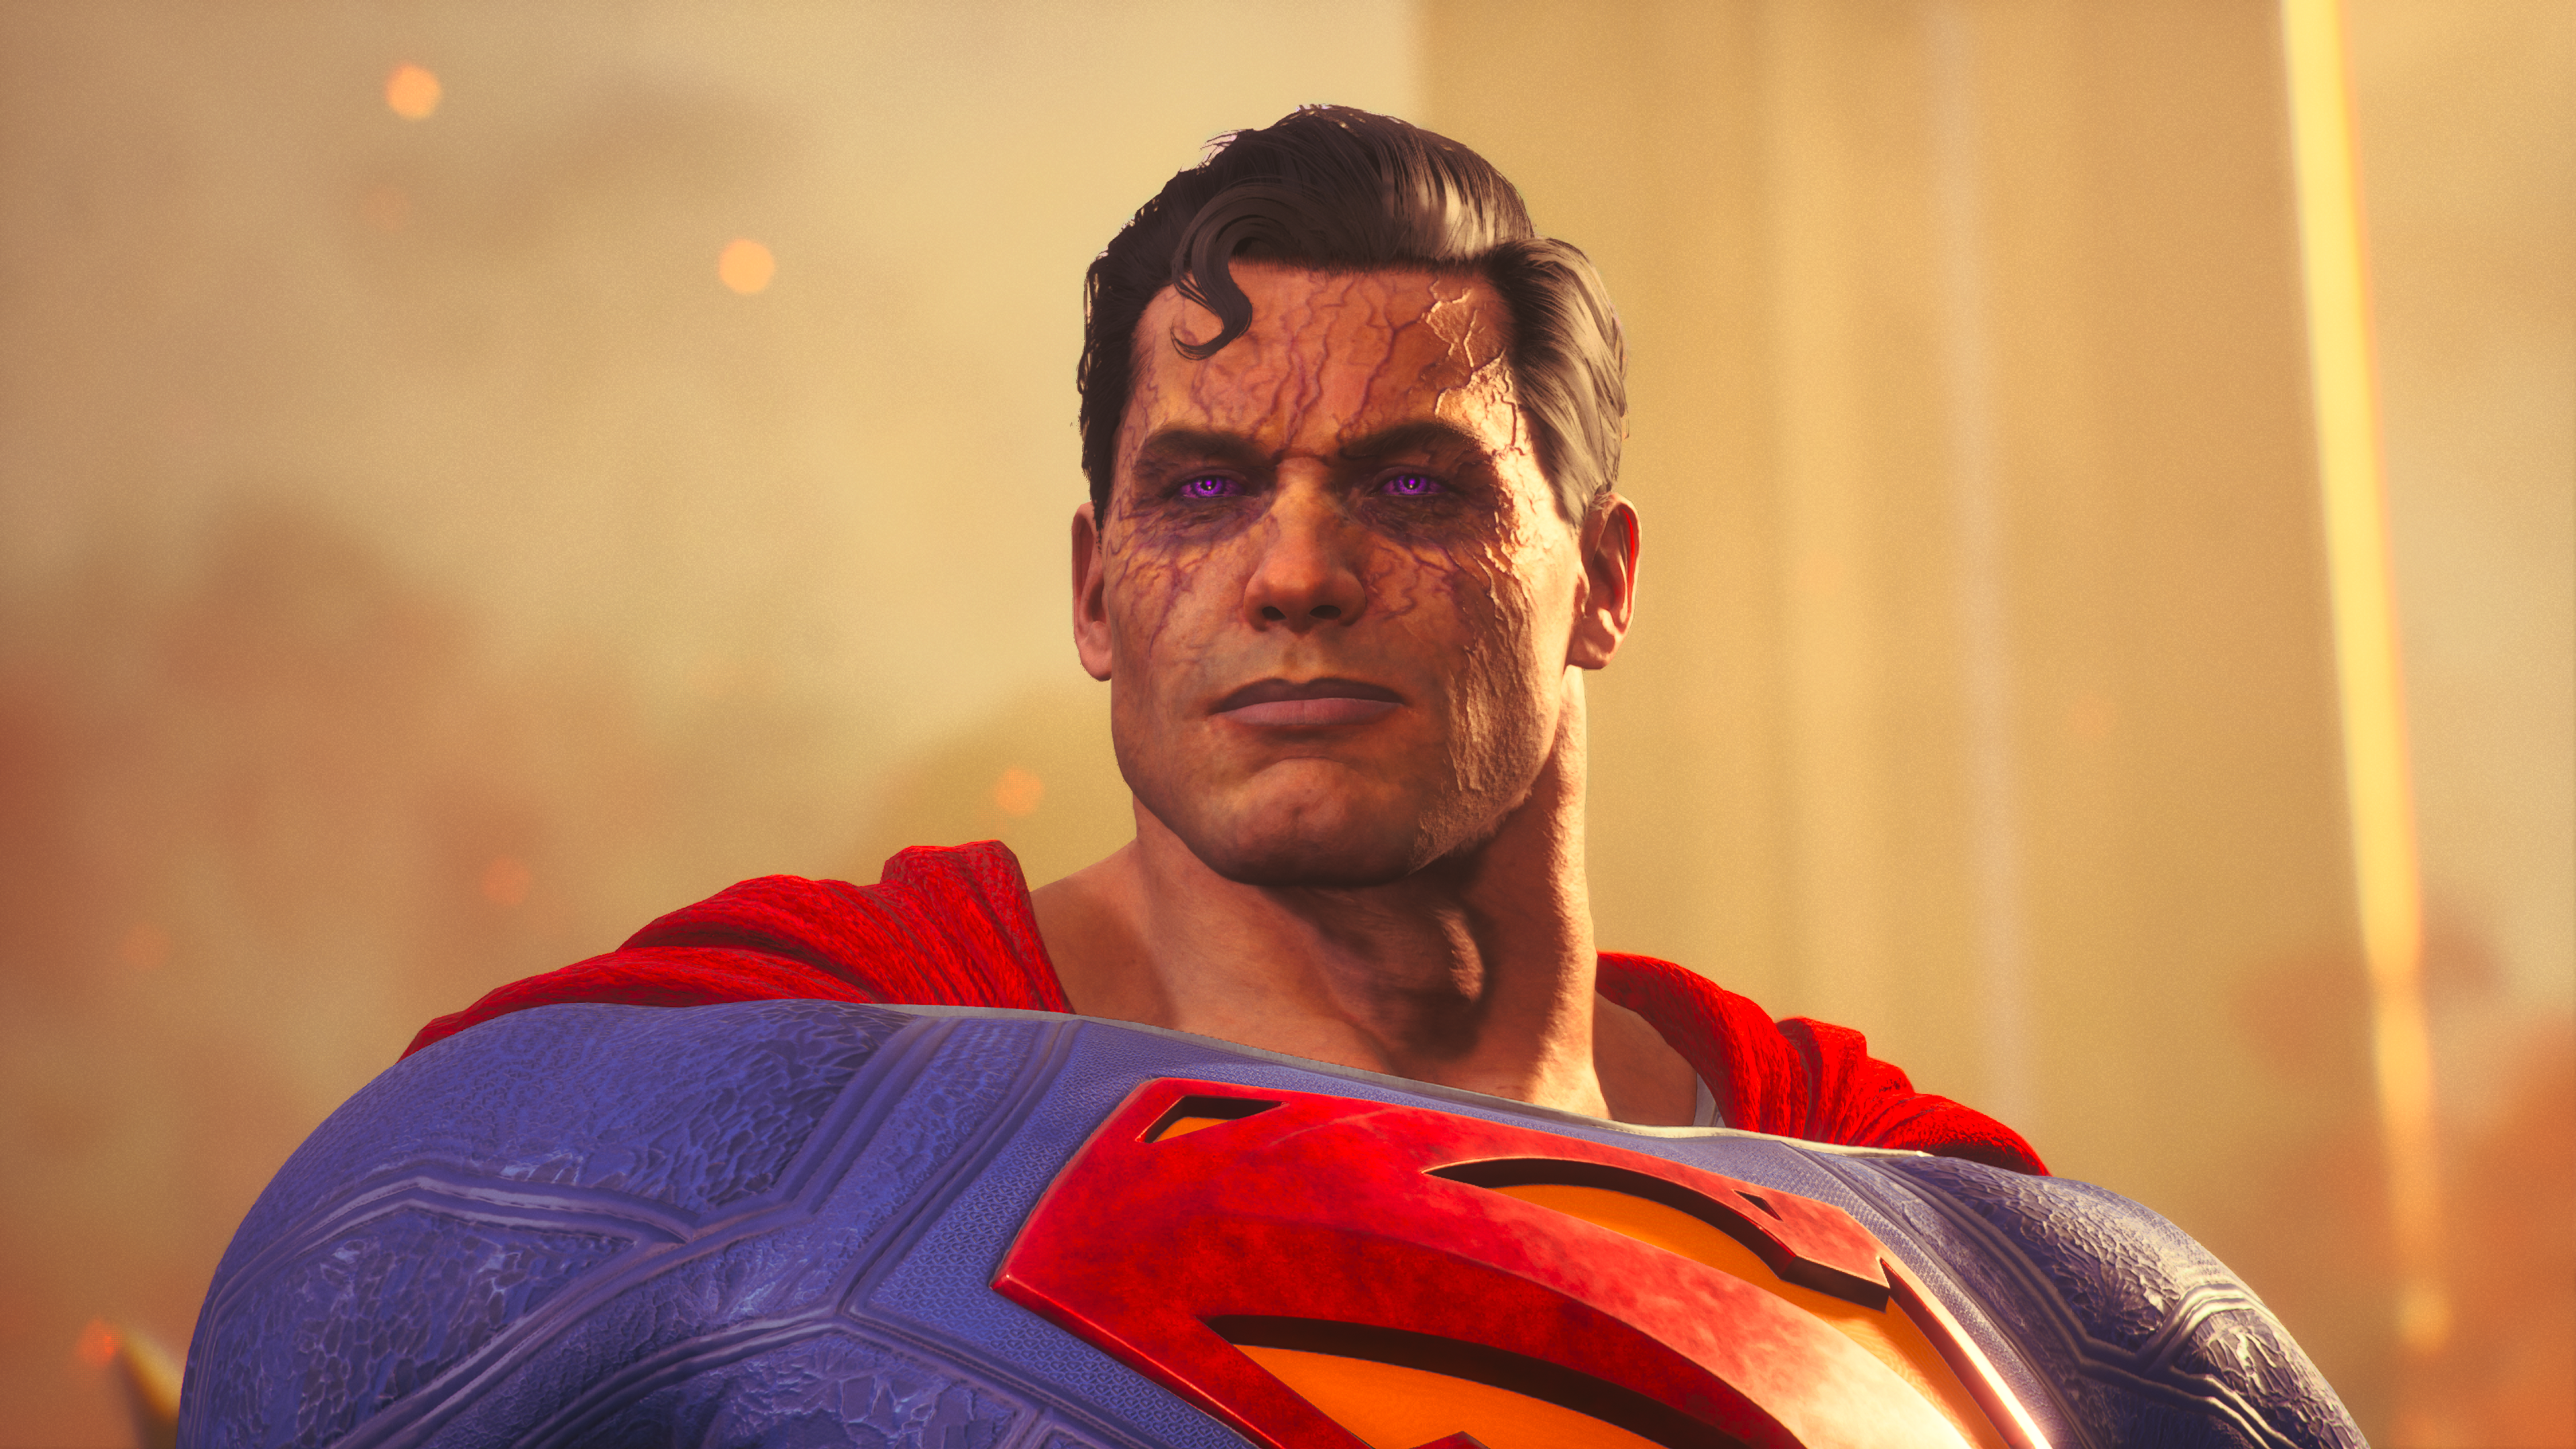 Captura de pantalla: Superman corrompido